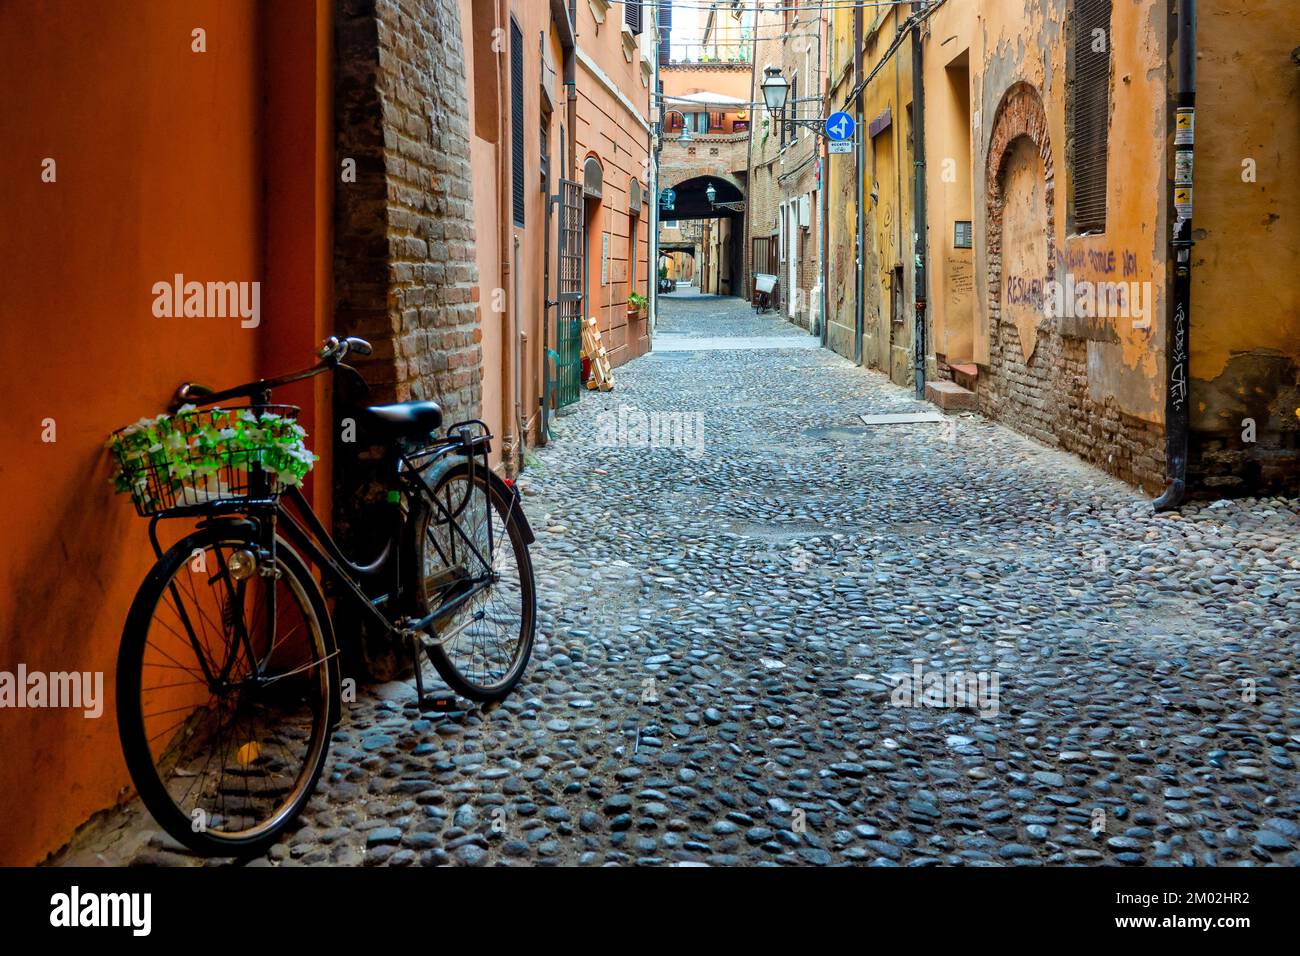 Bicycle in Via delle Volte, Ferrara, Italy Stock Photo